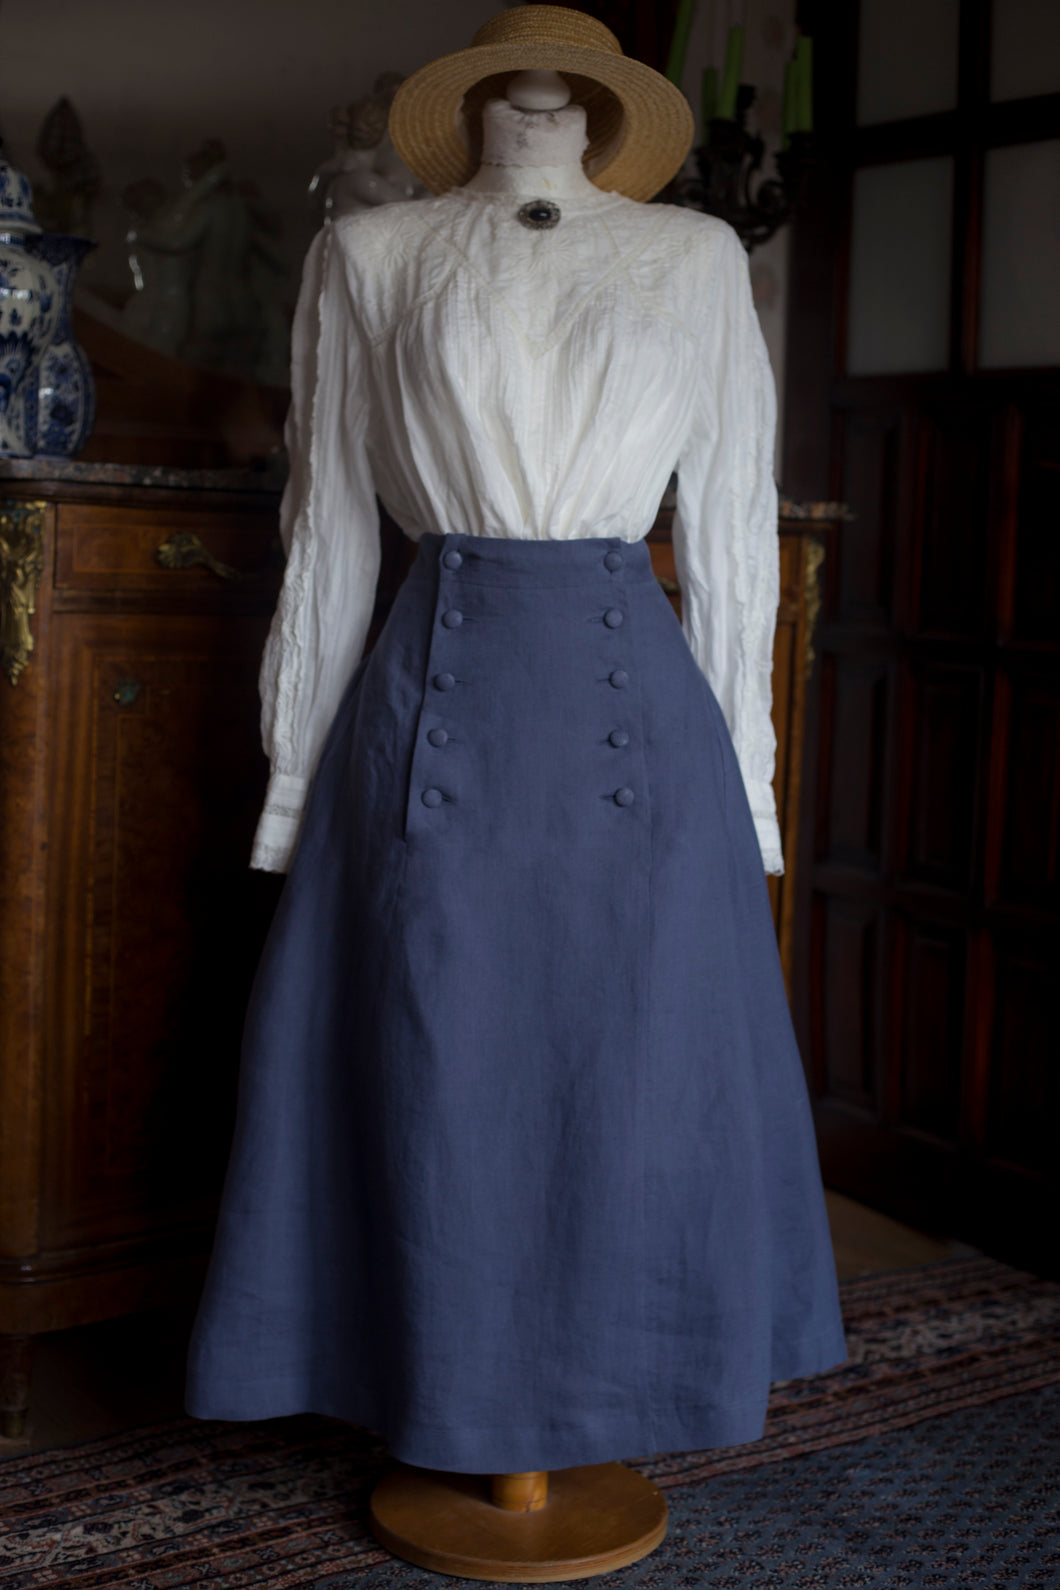 Edwardian summer skirt (Different colors)